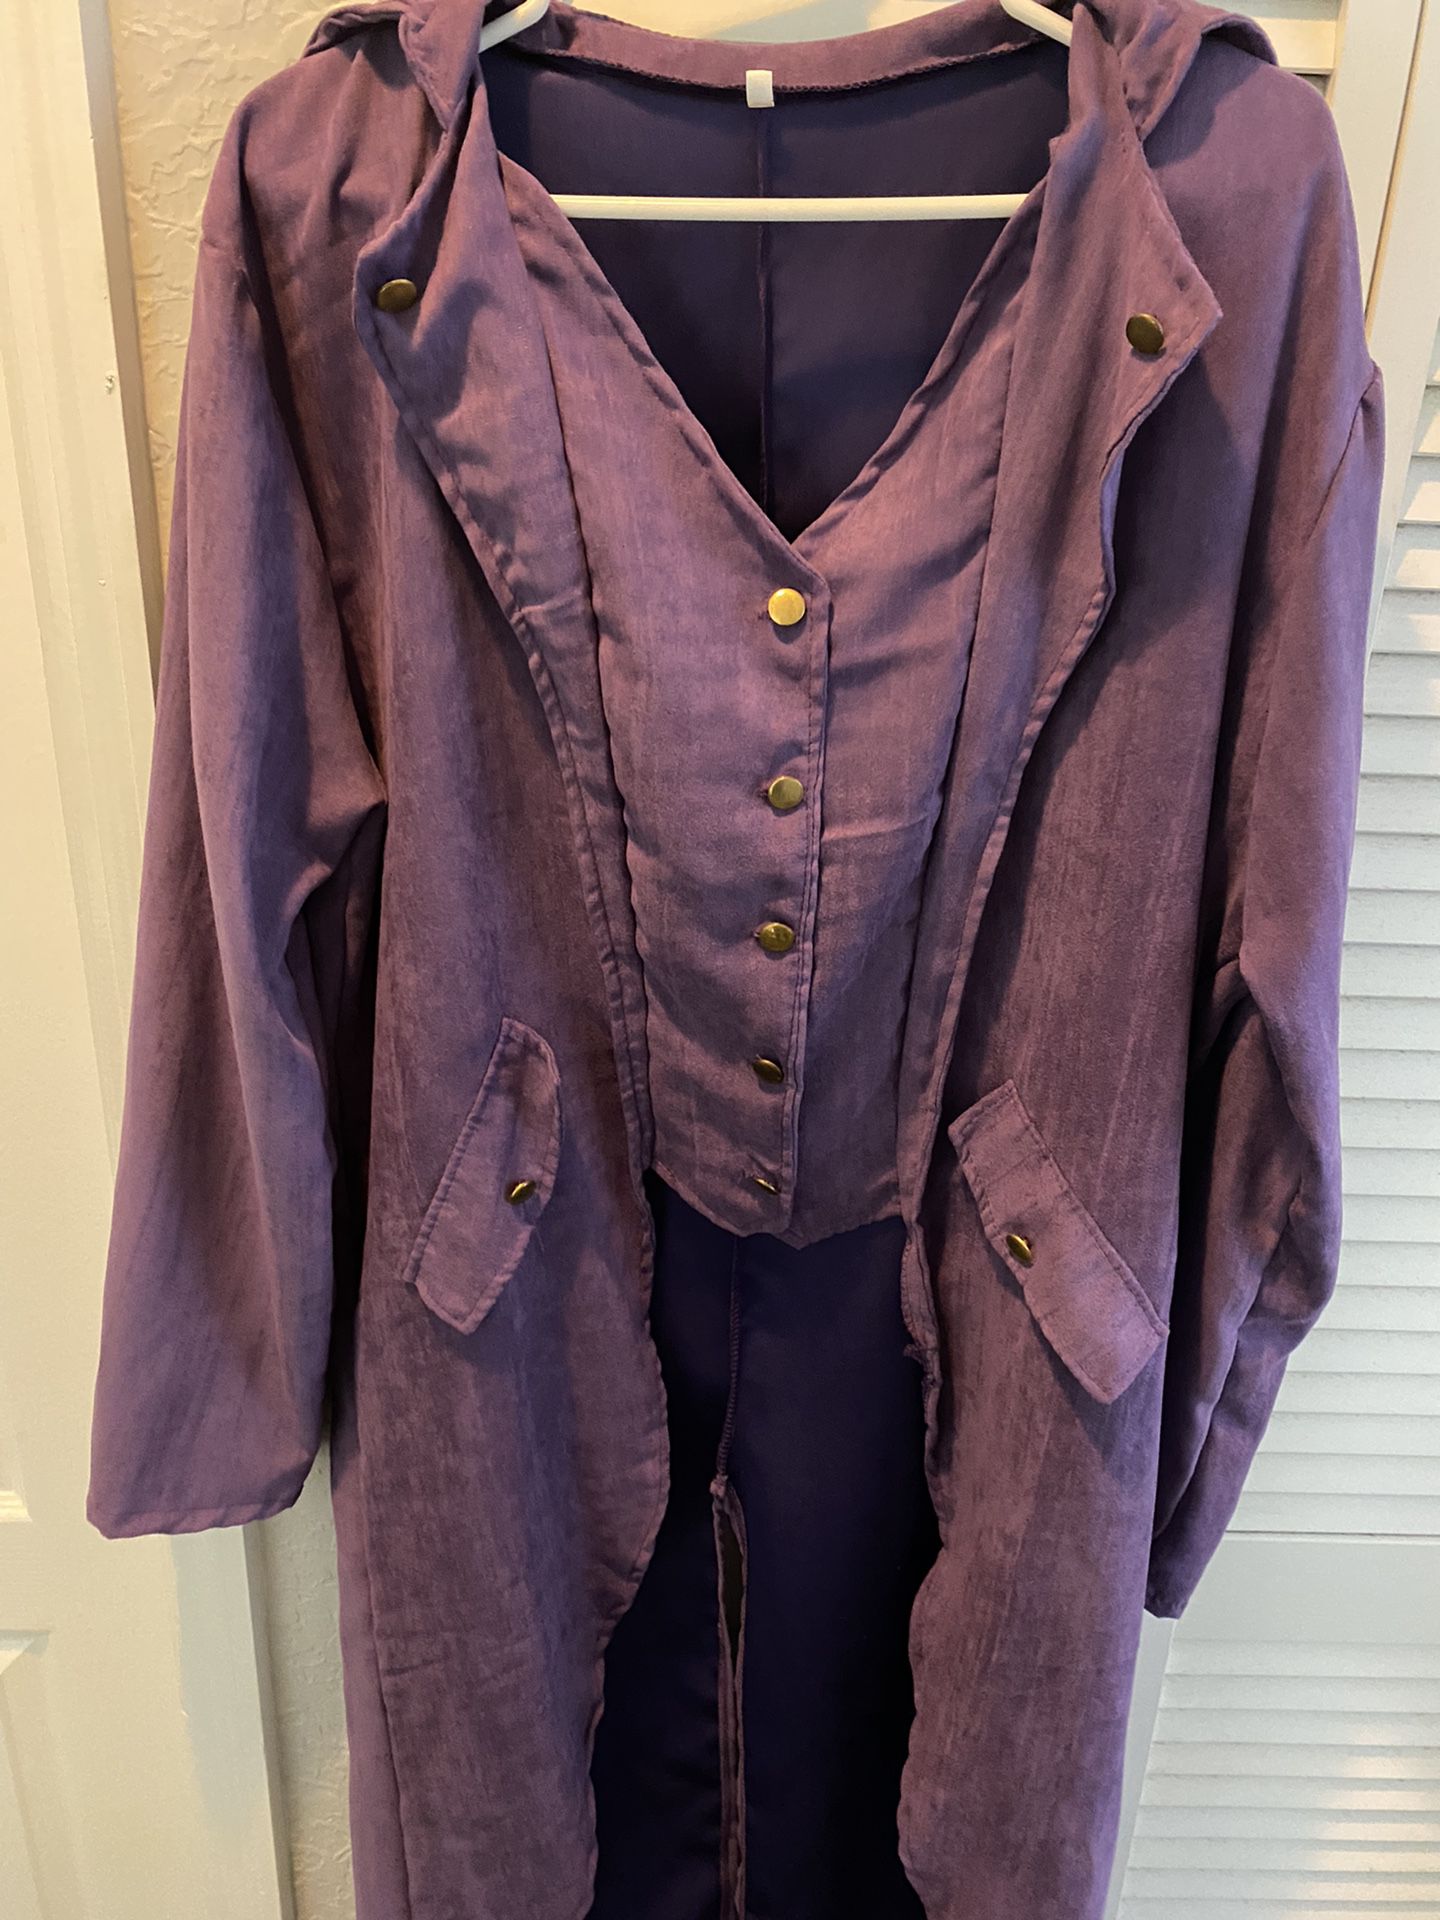 Joker Costume - Purple Coat Only